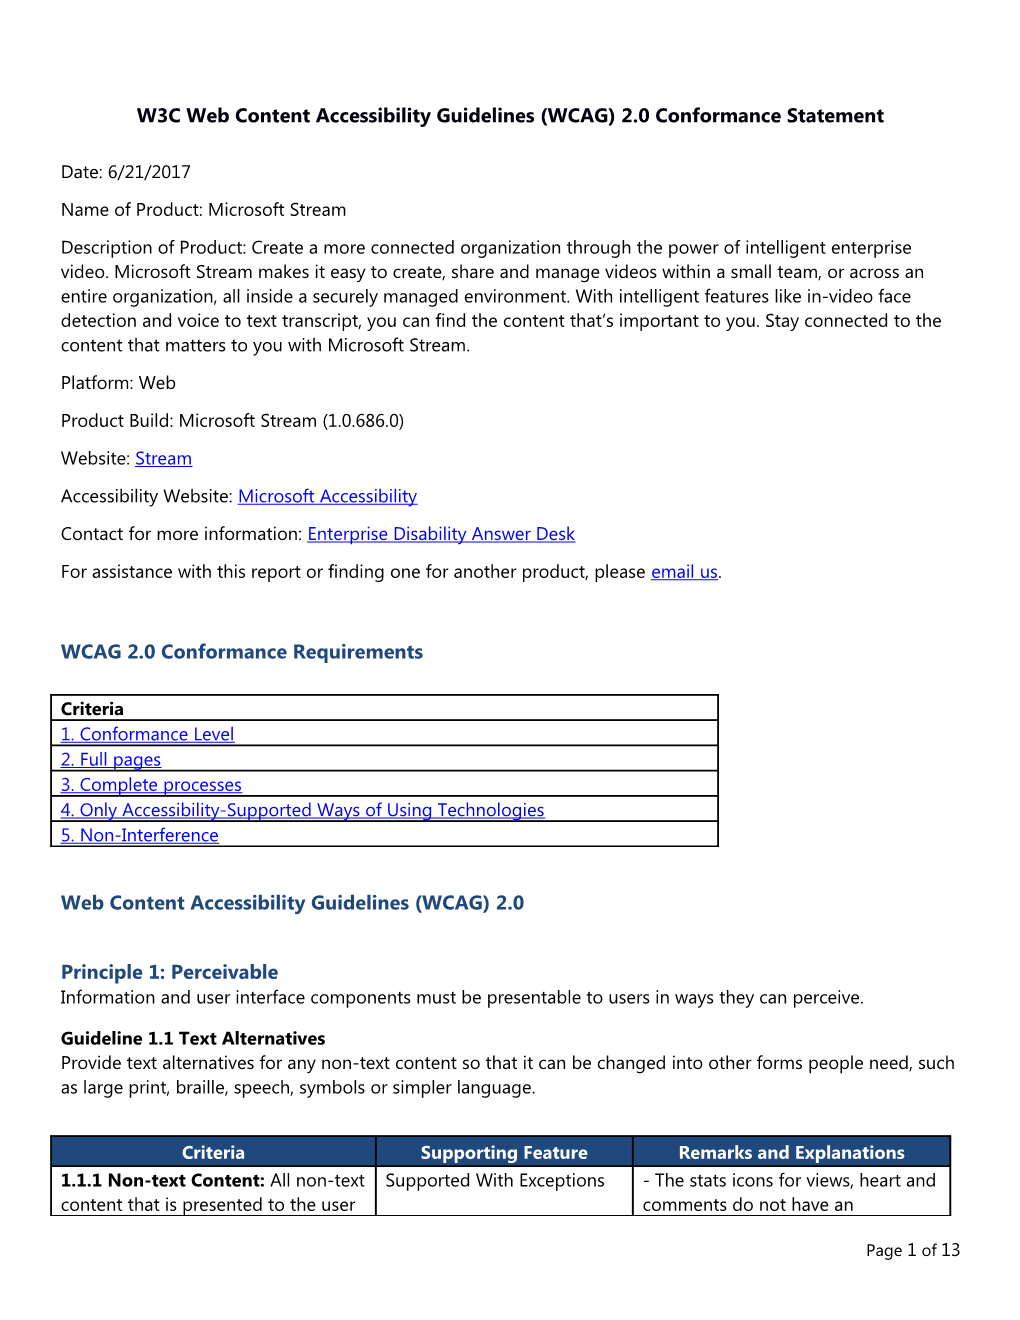 W3C Web Content Accessibility Guidelines (WCAG) 2.0 Conformance Statement s4